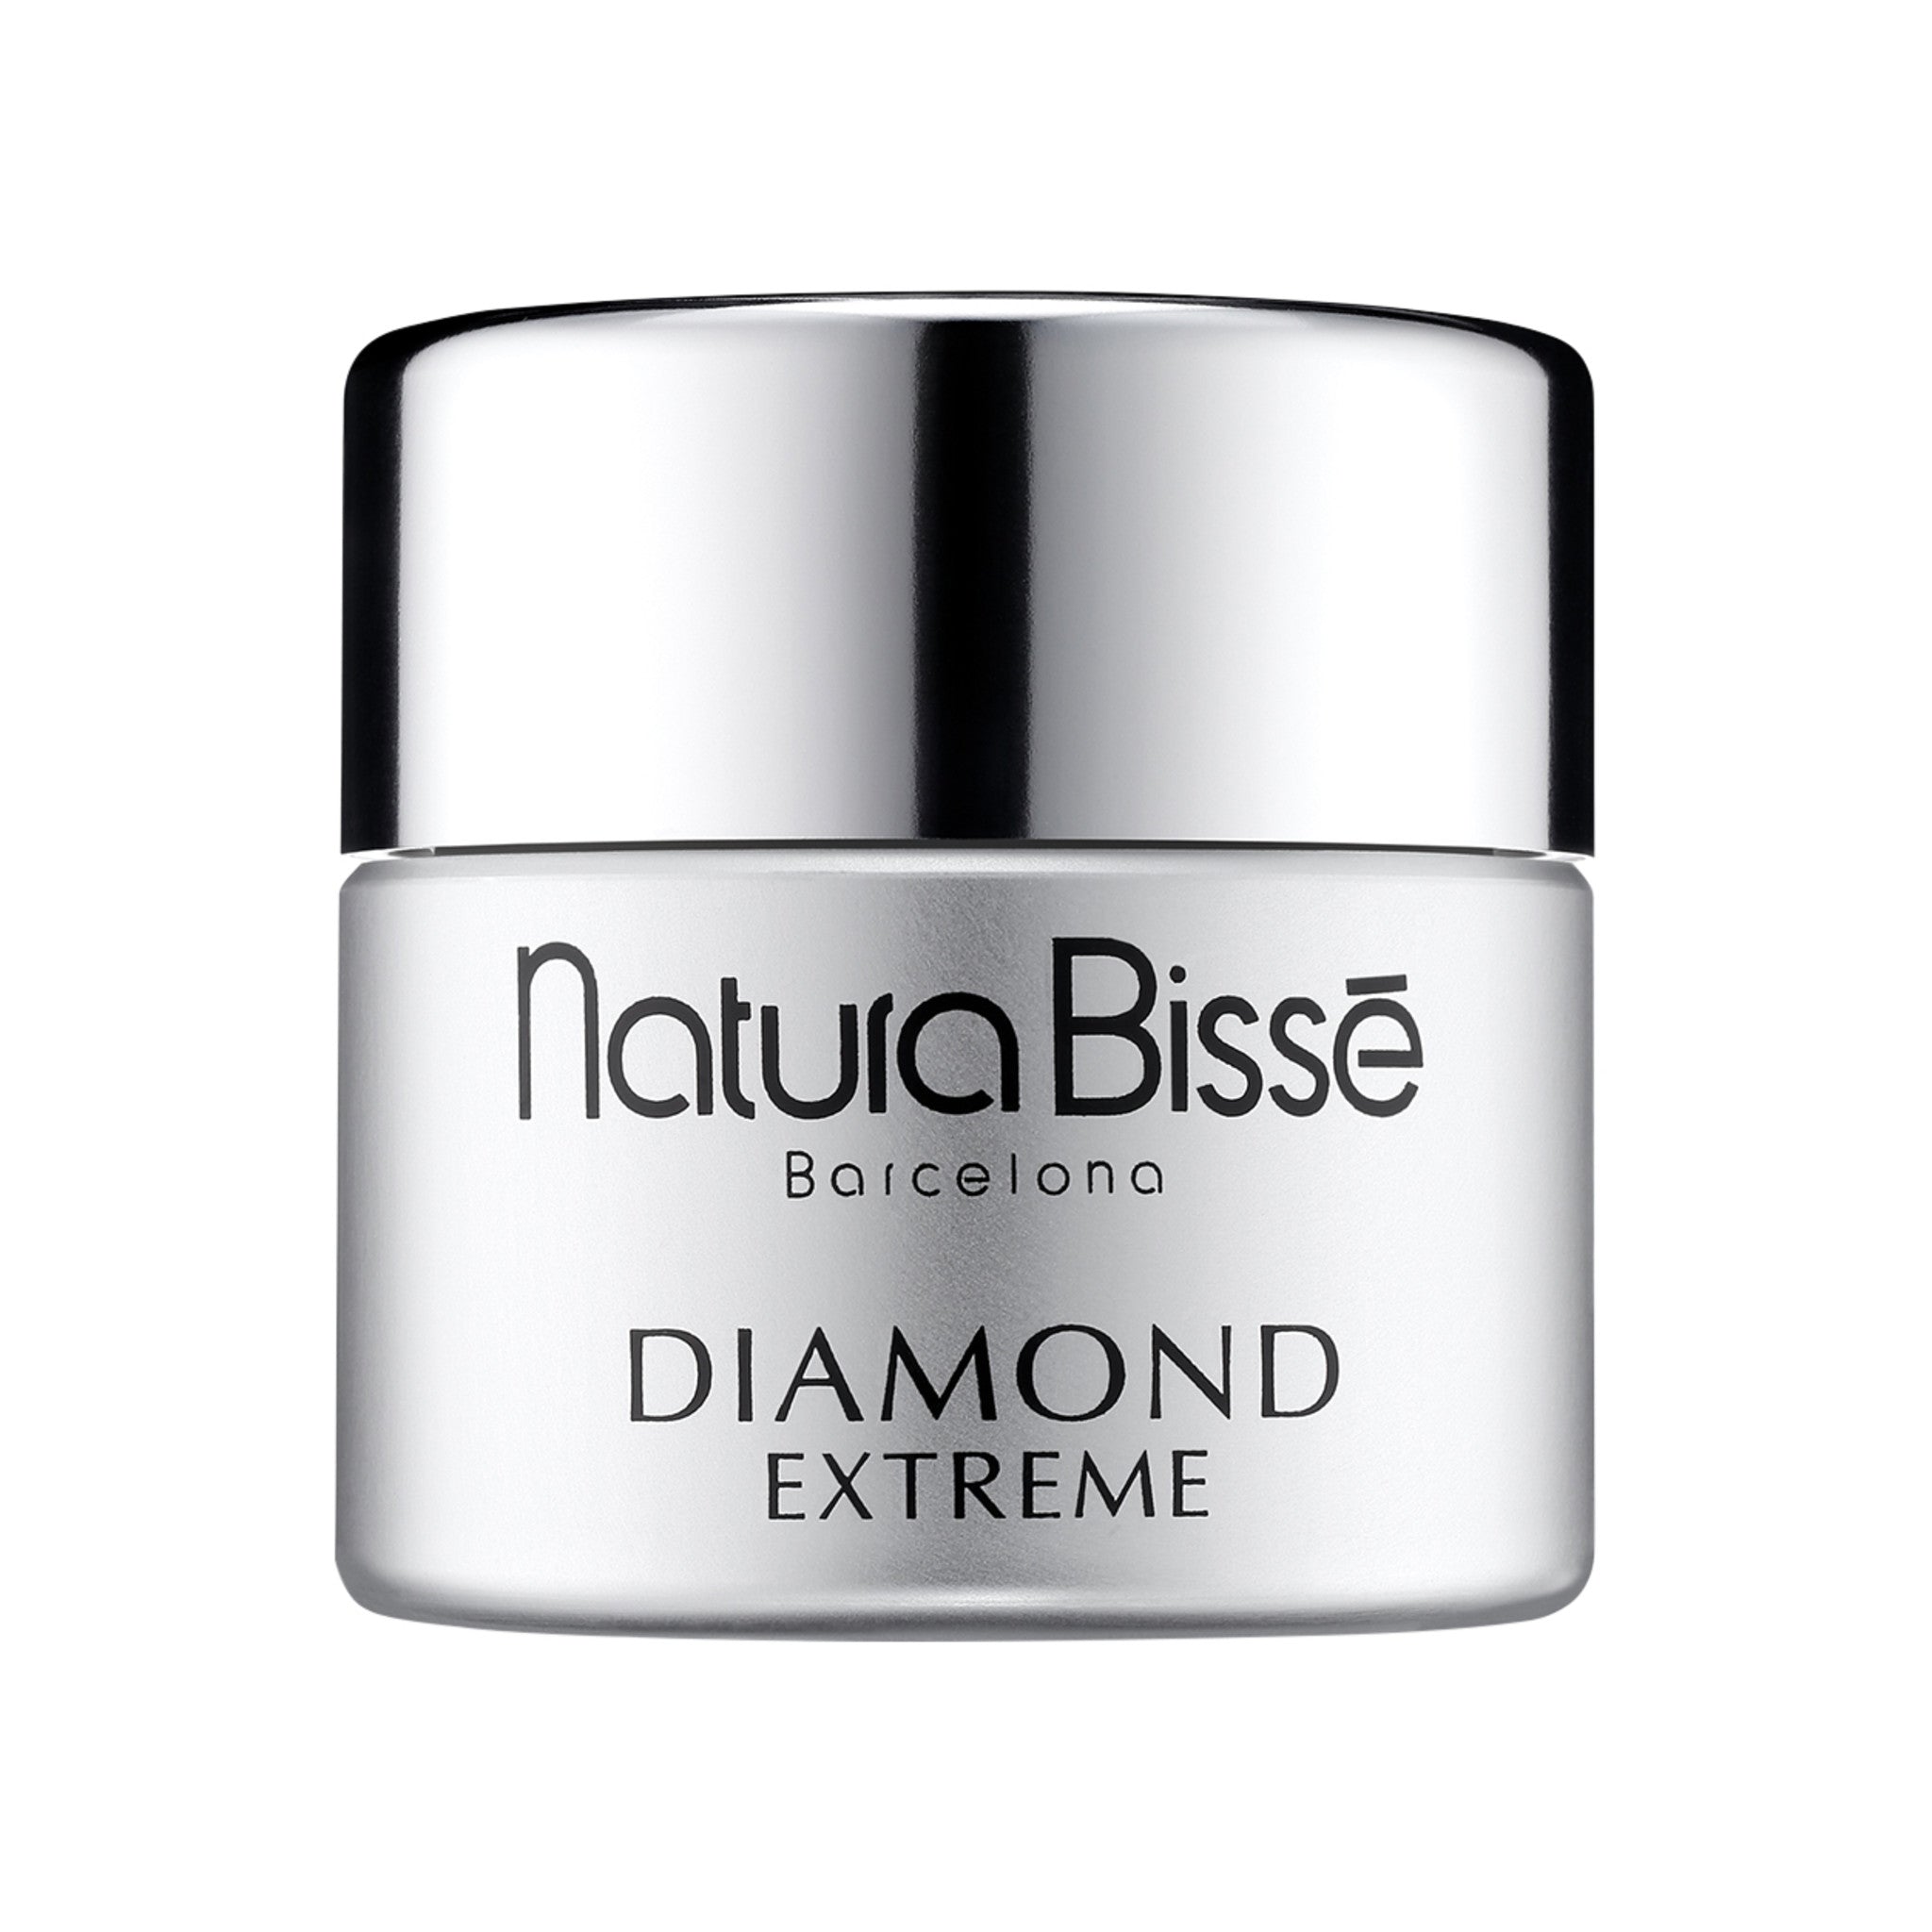 Natura Bissé Diamond Extreme Cream Size variant: 1.7 oz main image.